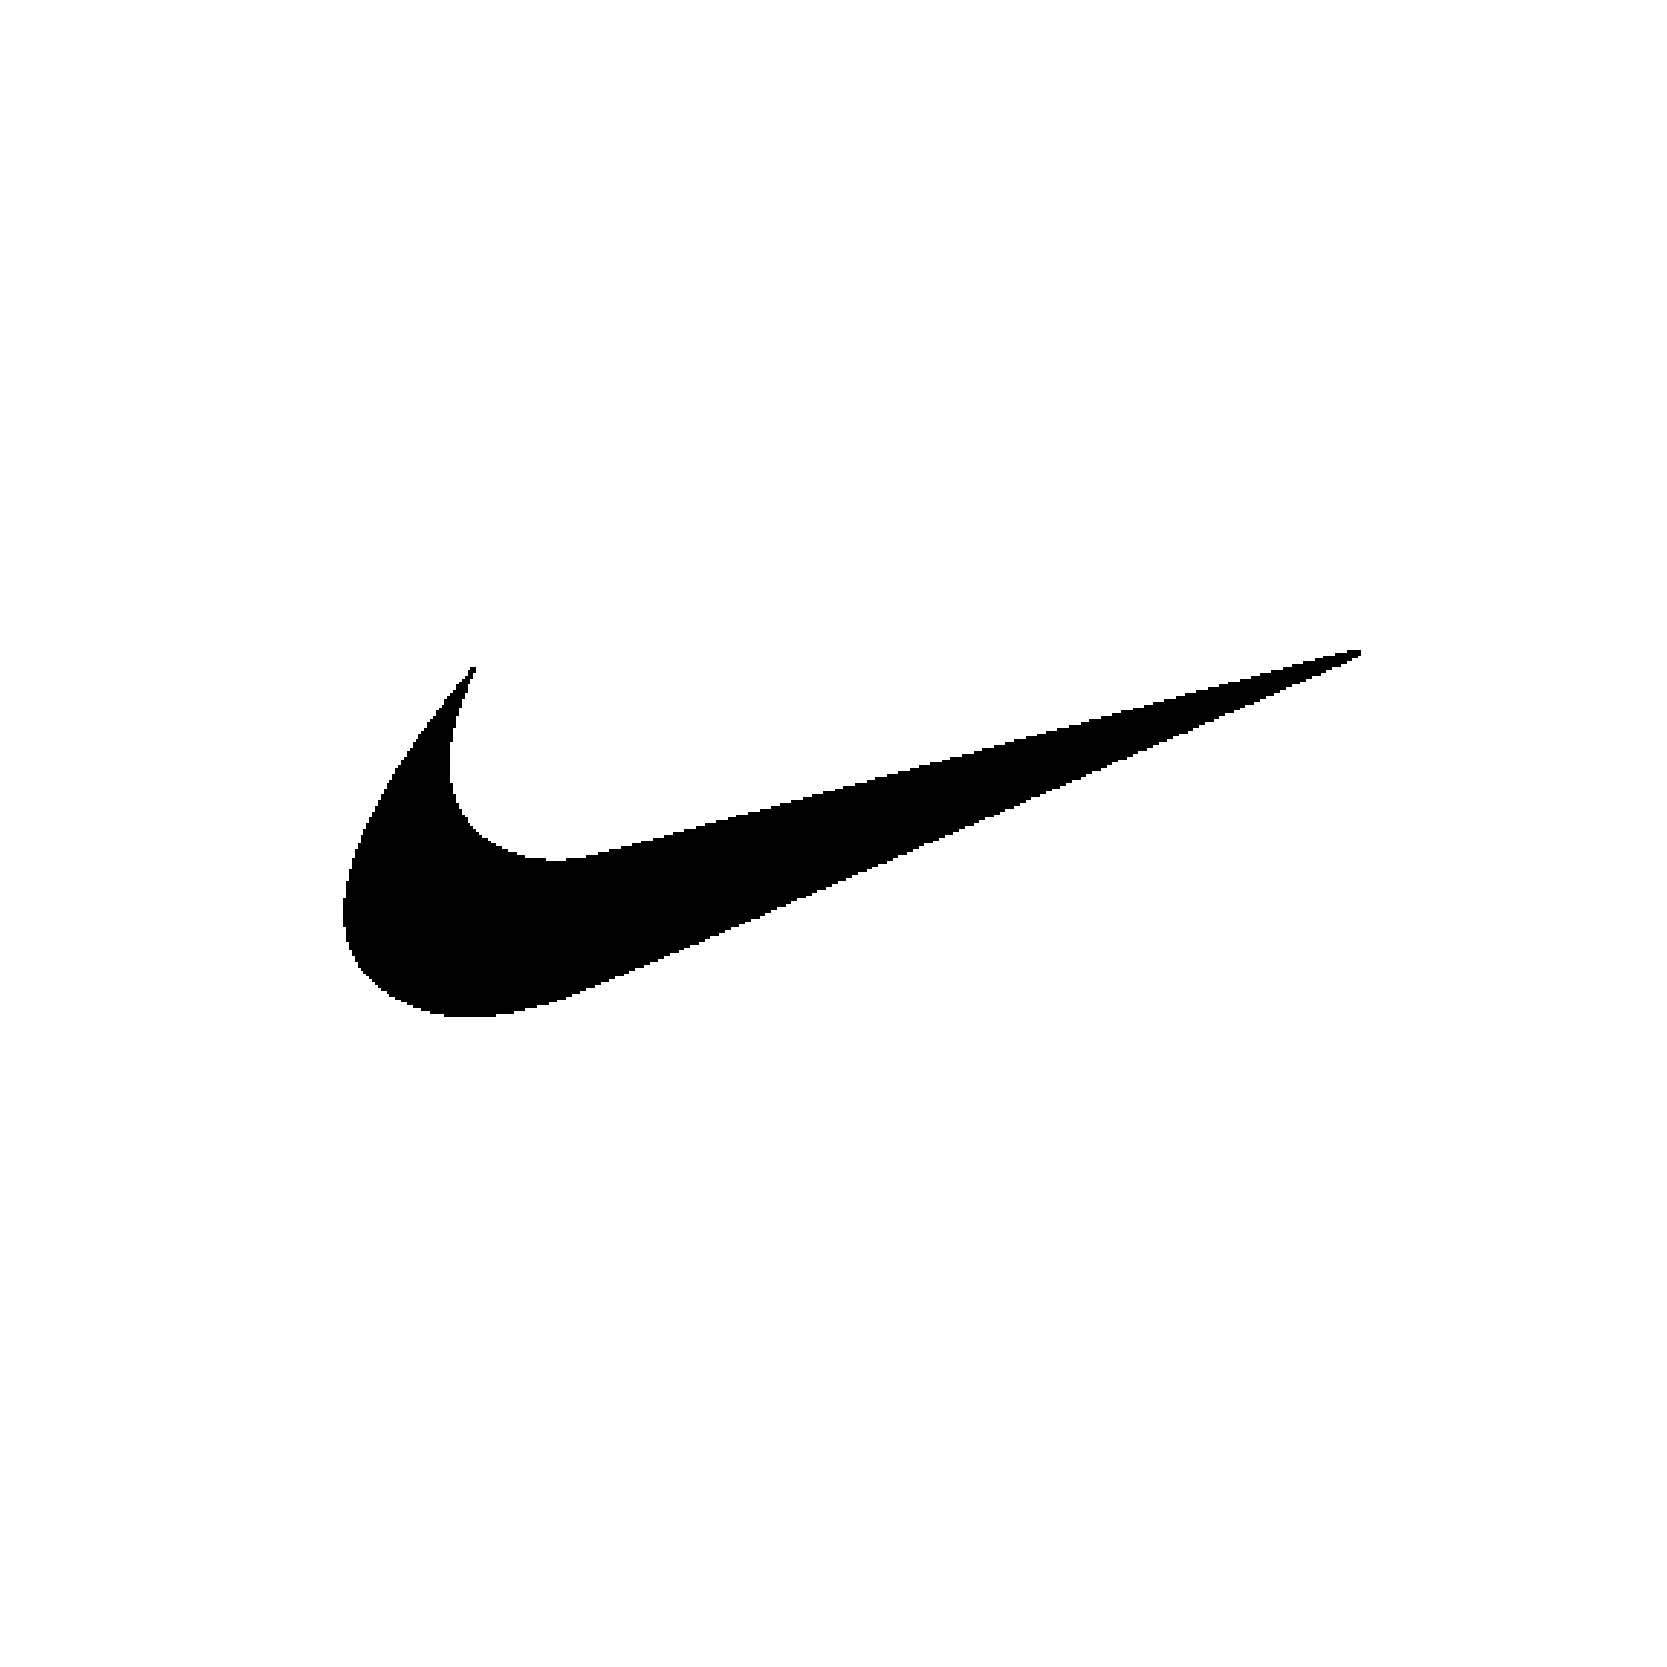 Nike shares